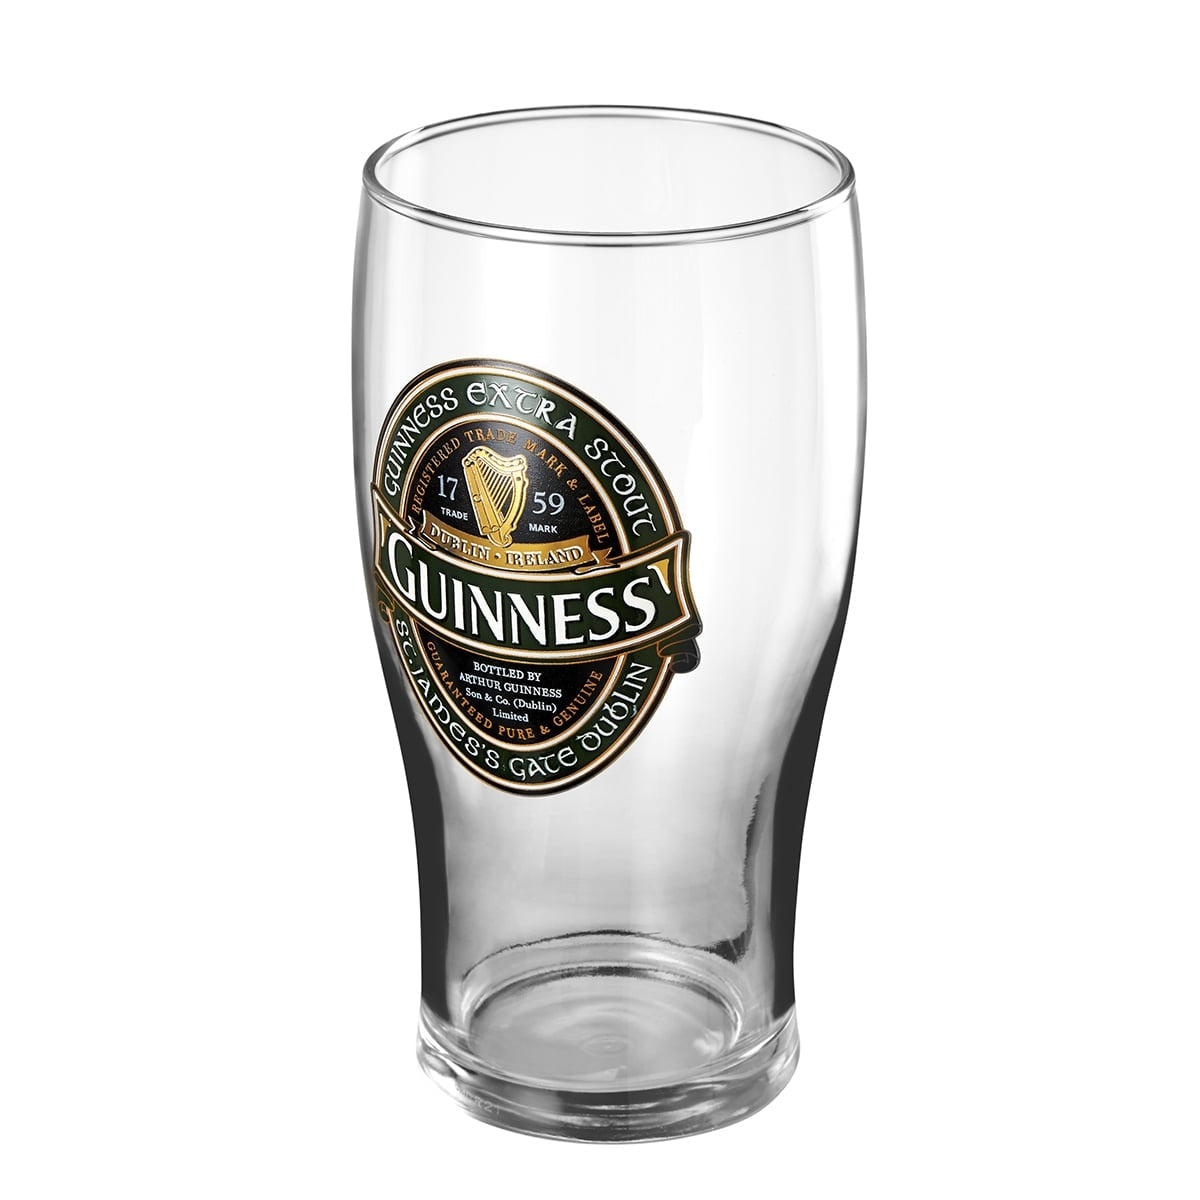 Guinness UK Ireland Collection Guinness pint glasses.